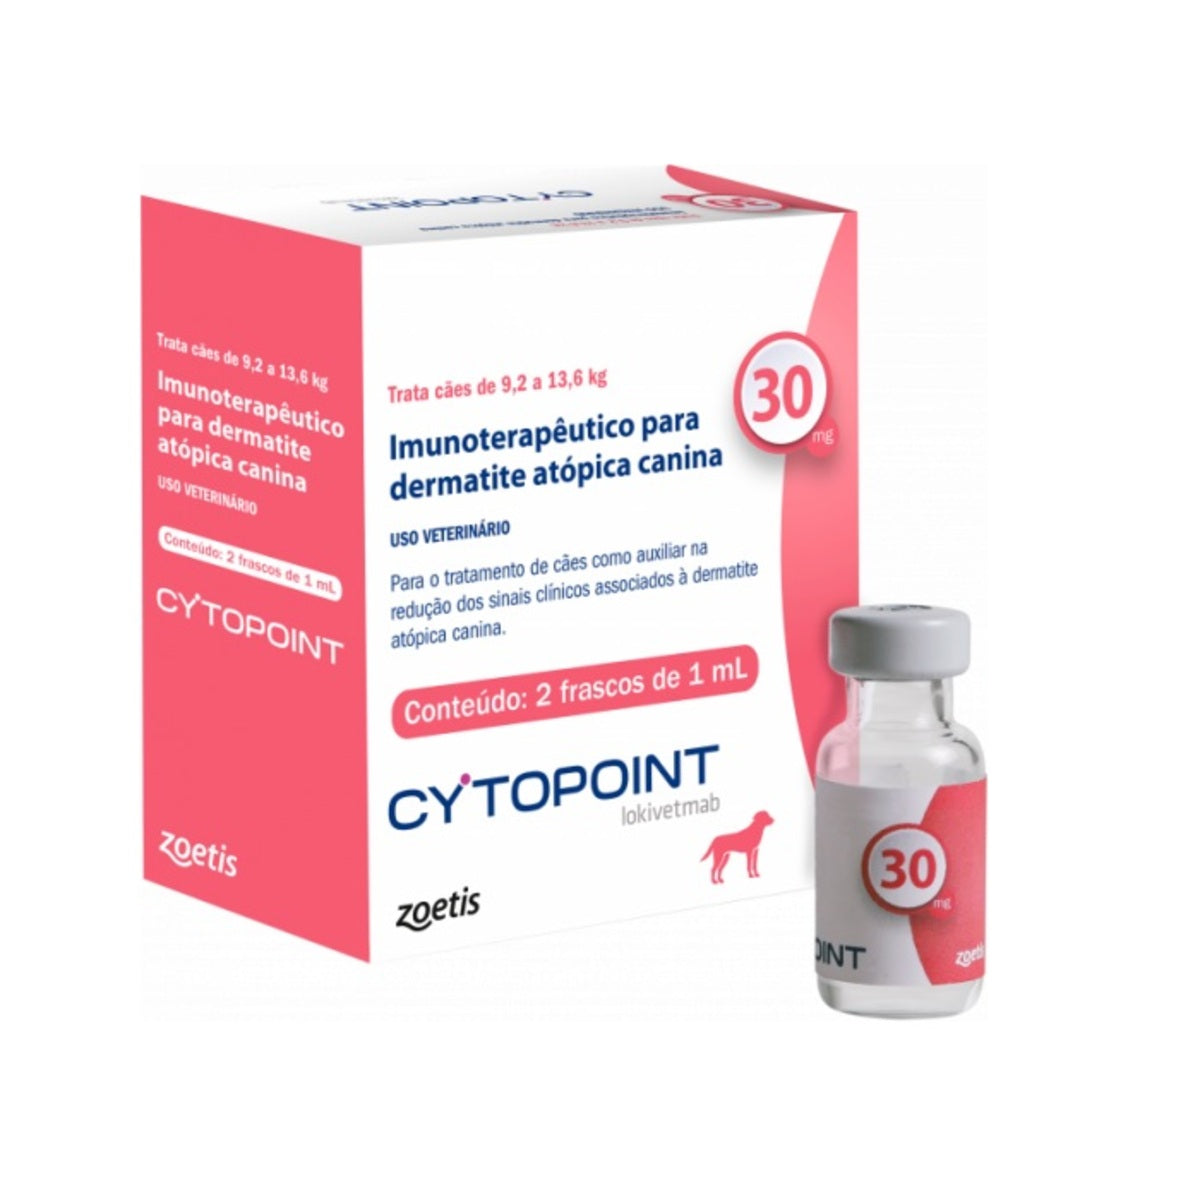 Cytopoint 30 mg/ml – 1 vial